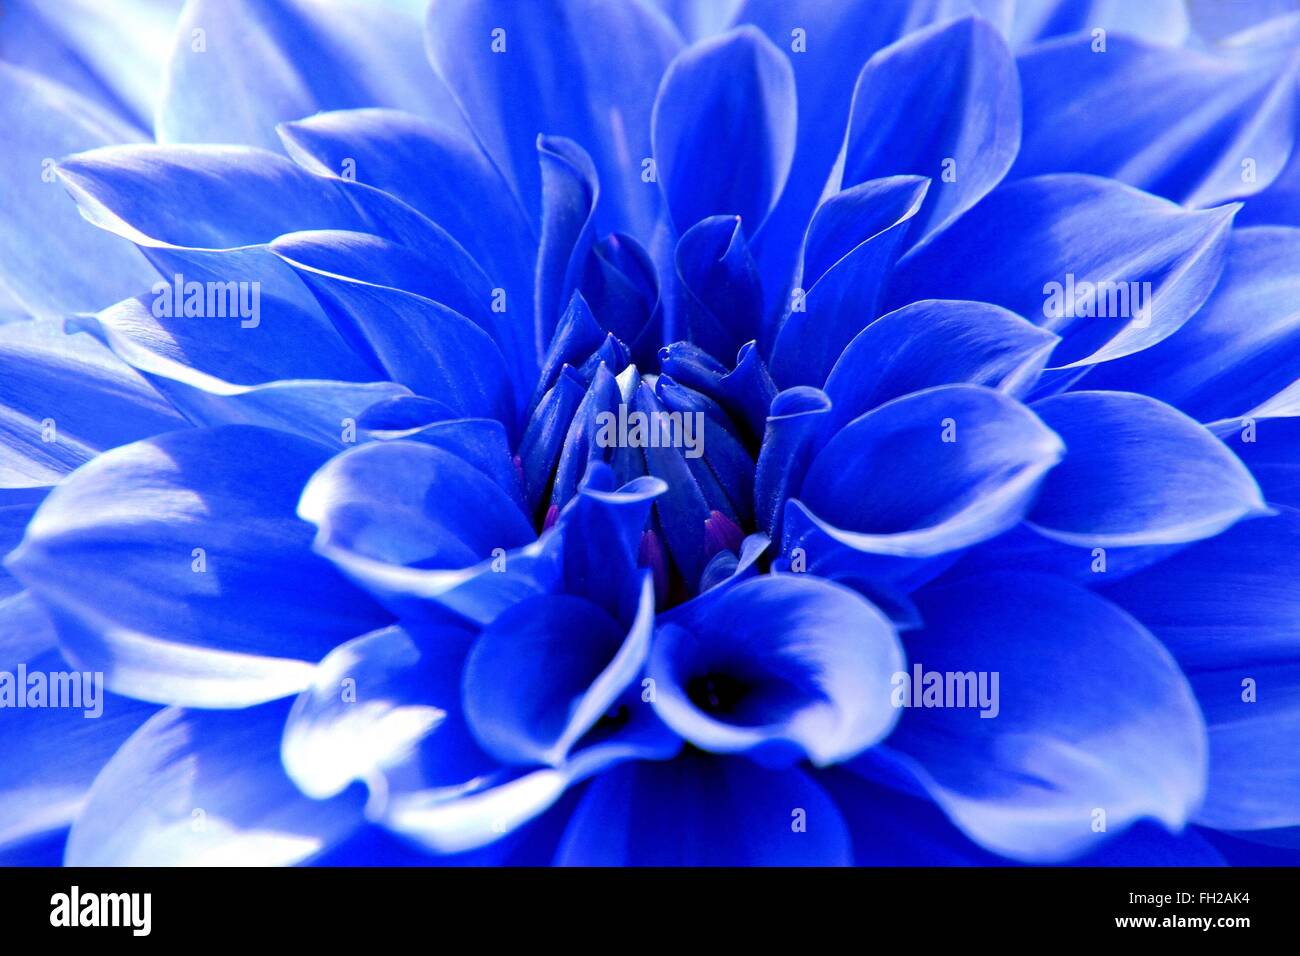 Flor de dalia azul fotografías e imágenes de alta resolución - Alamy